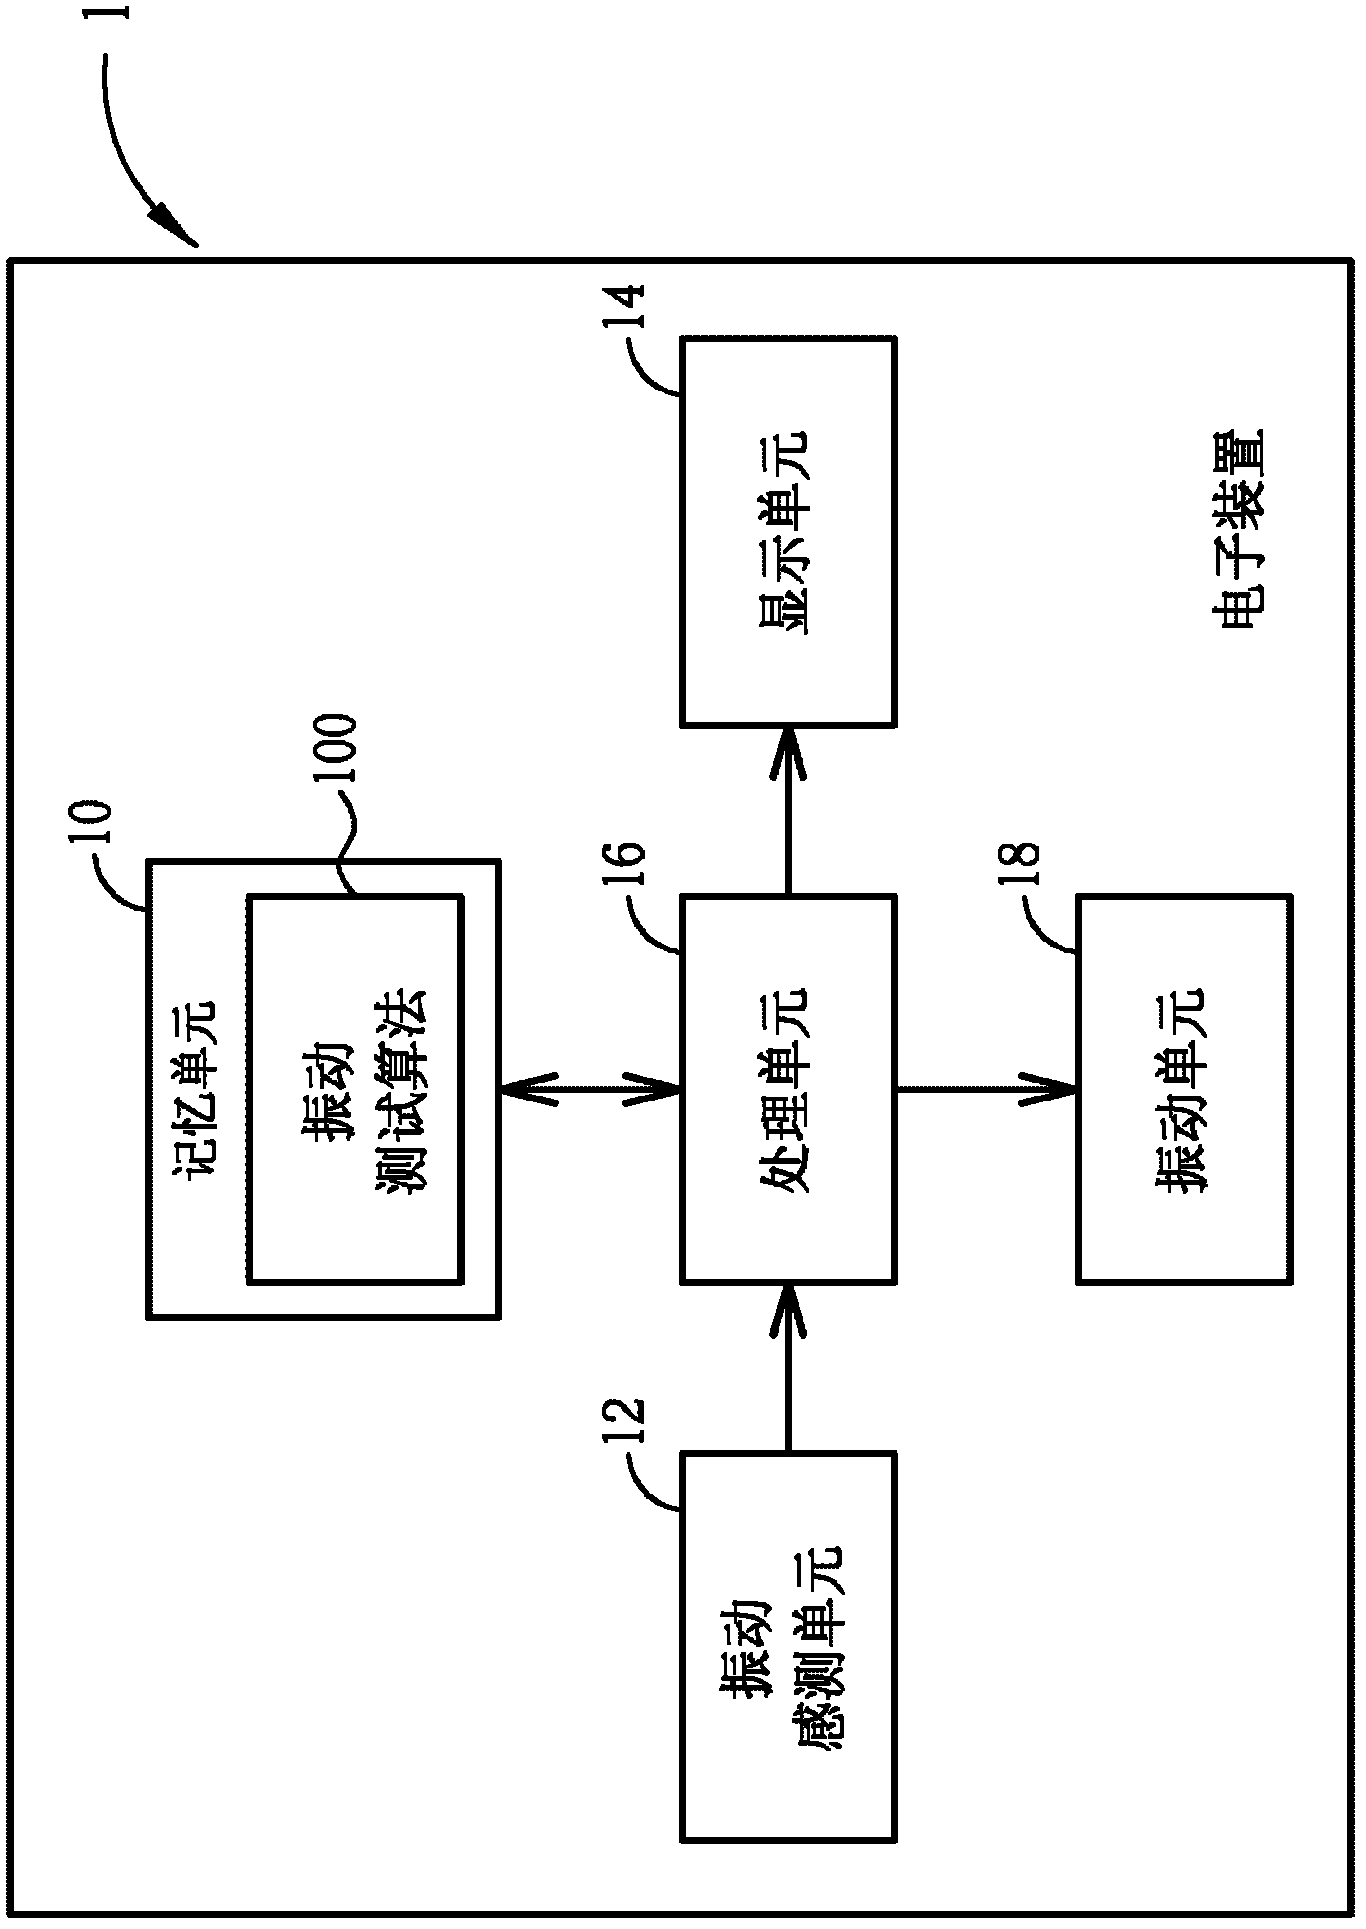 Electronic device with vibration test function and method for establishing vibration test algorithm